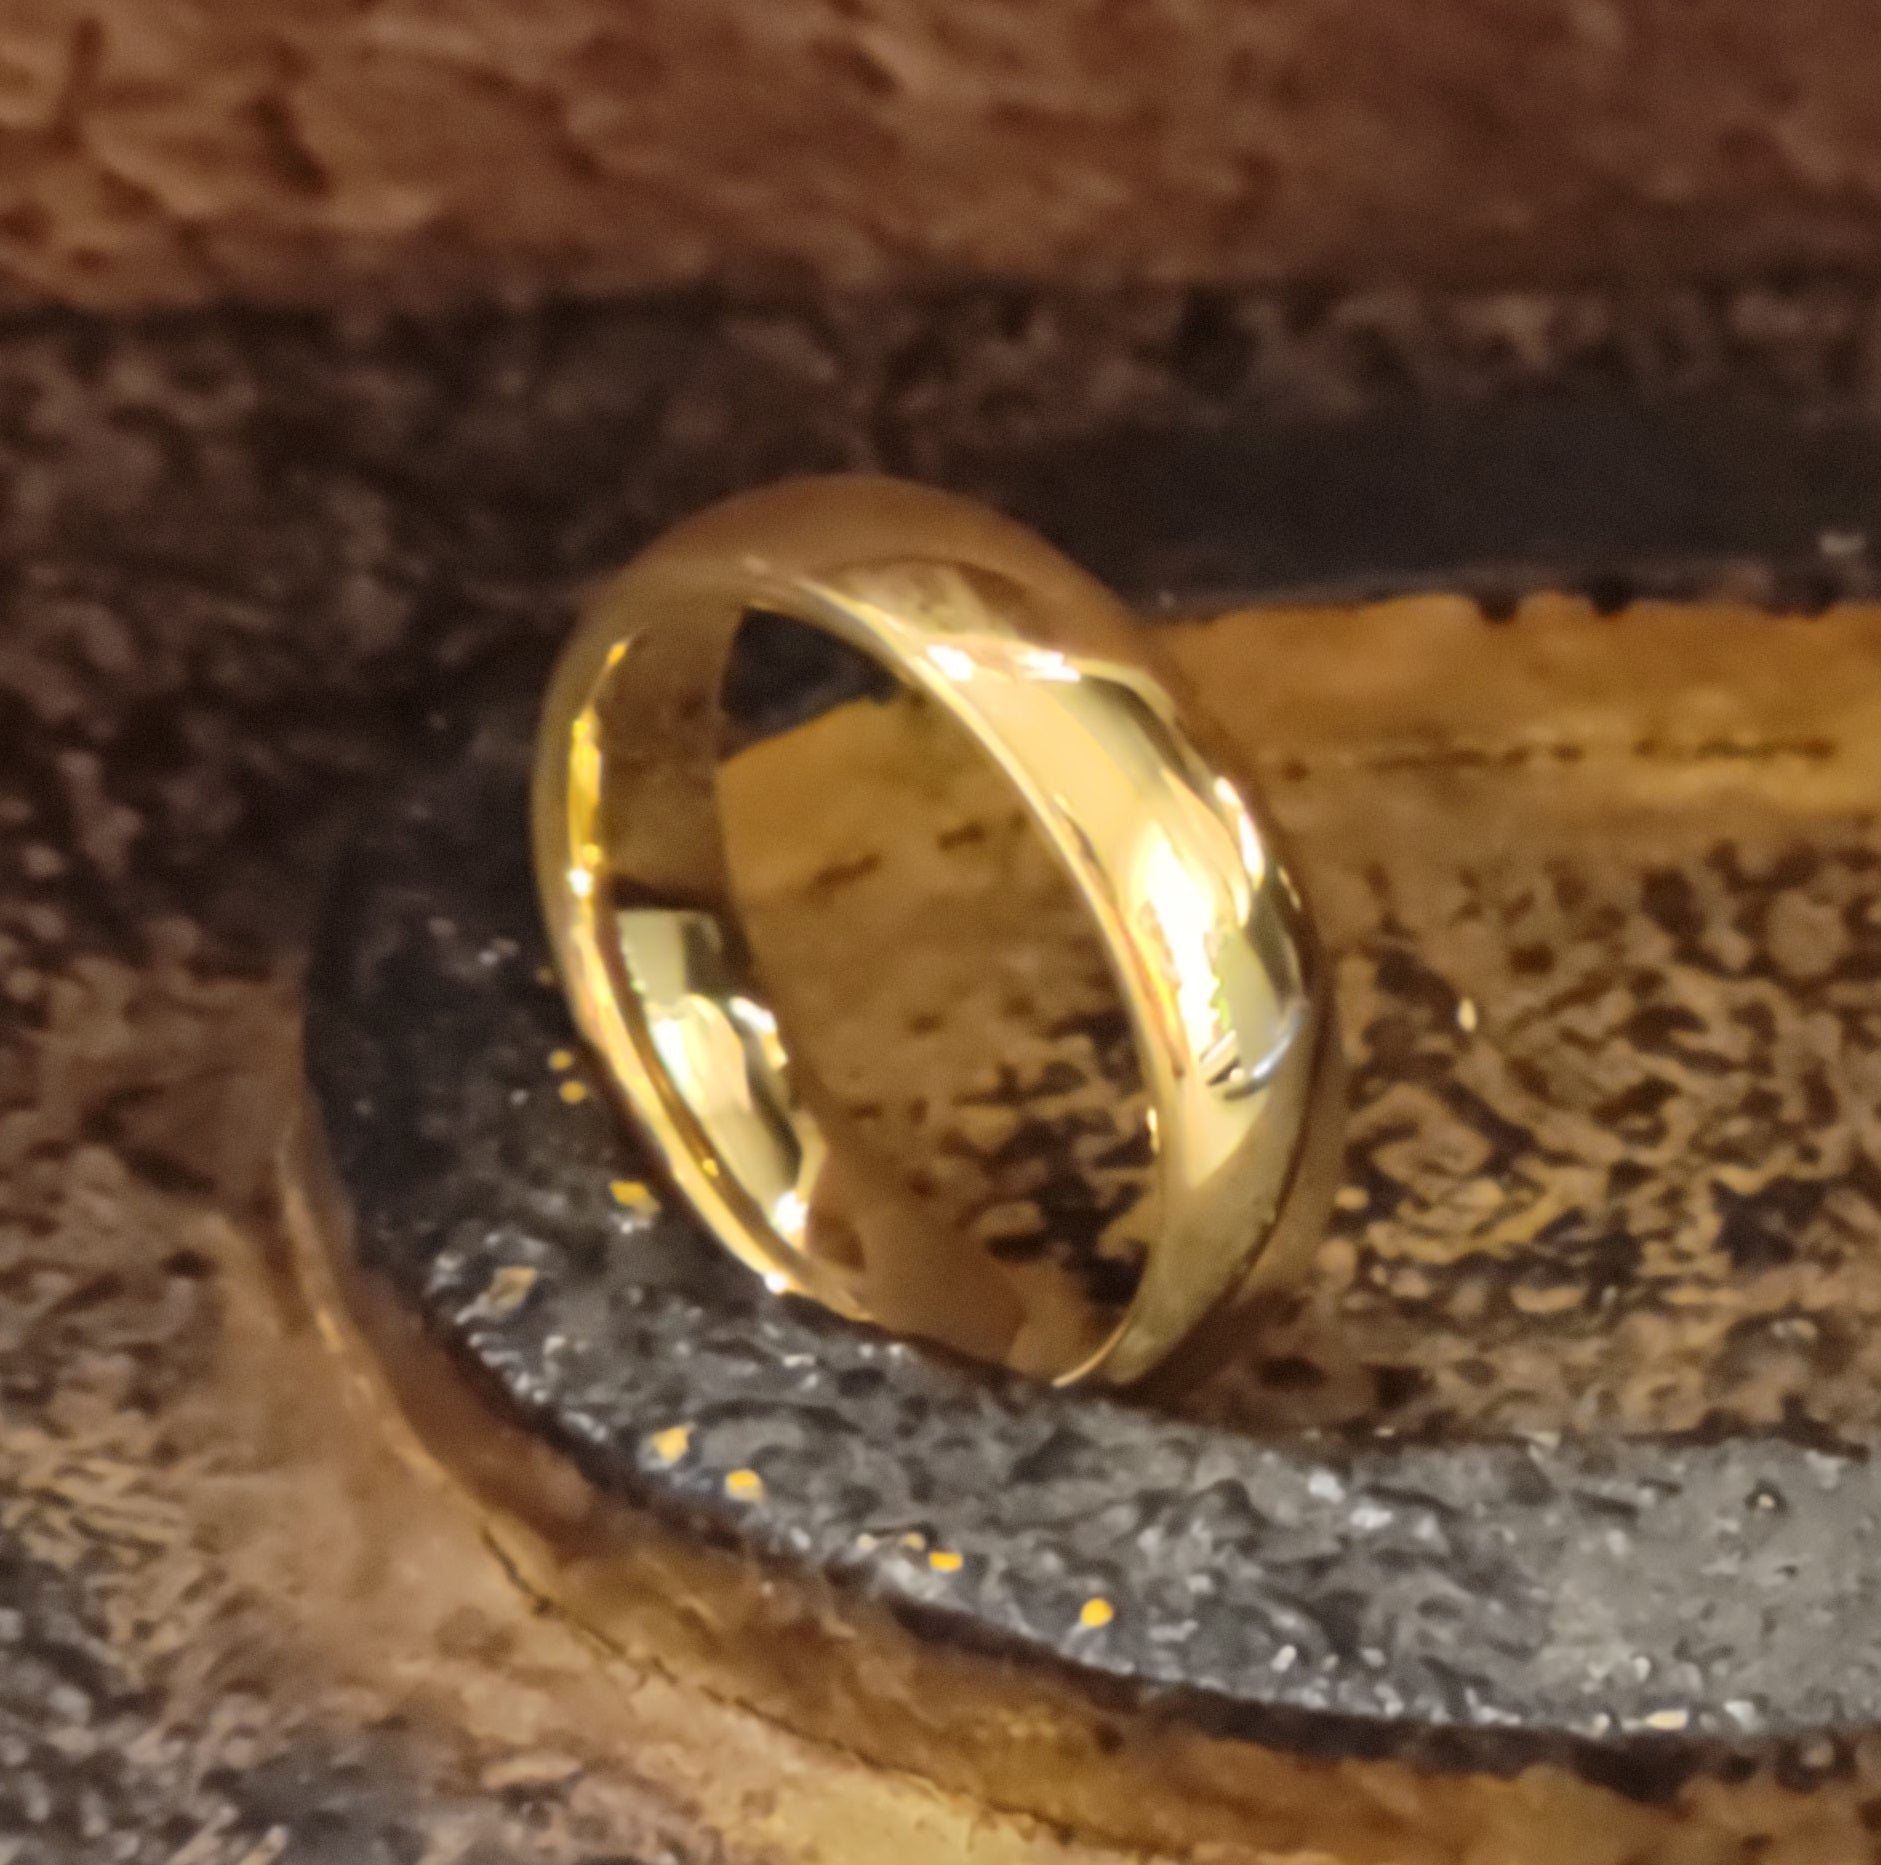 ThinkEngraved Promise Ring Custom engraved Men's Gold Promise Ring - Personalized Handwriting Promise Ring